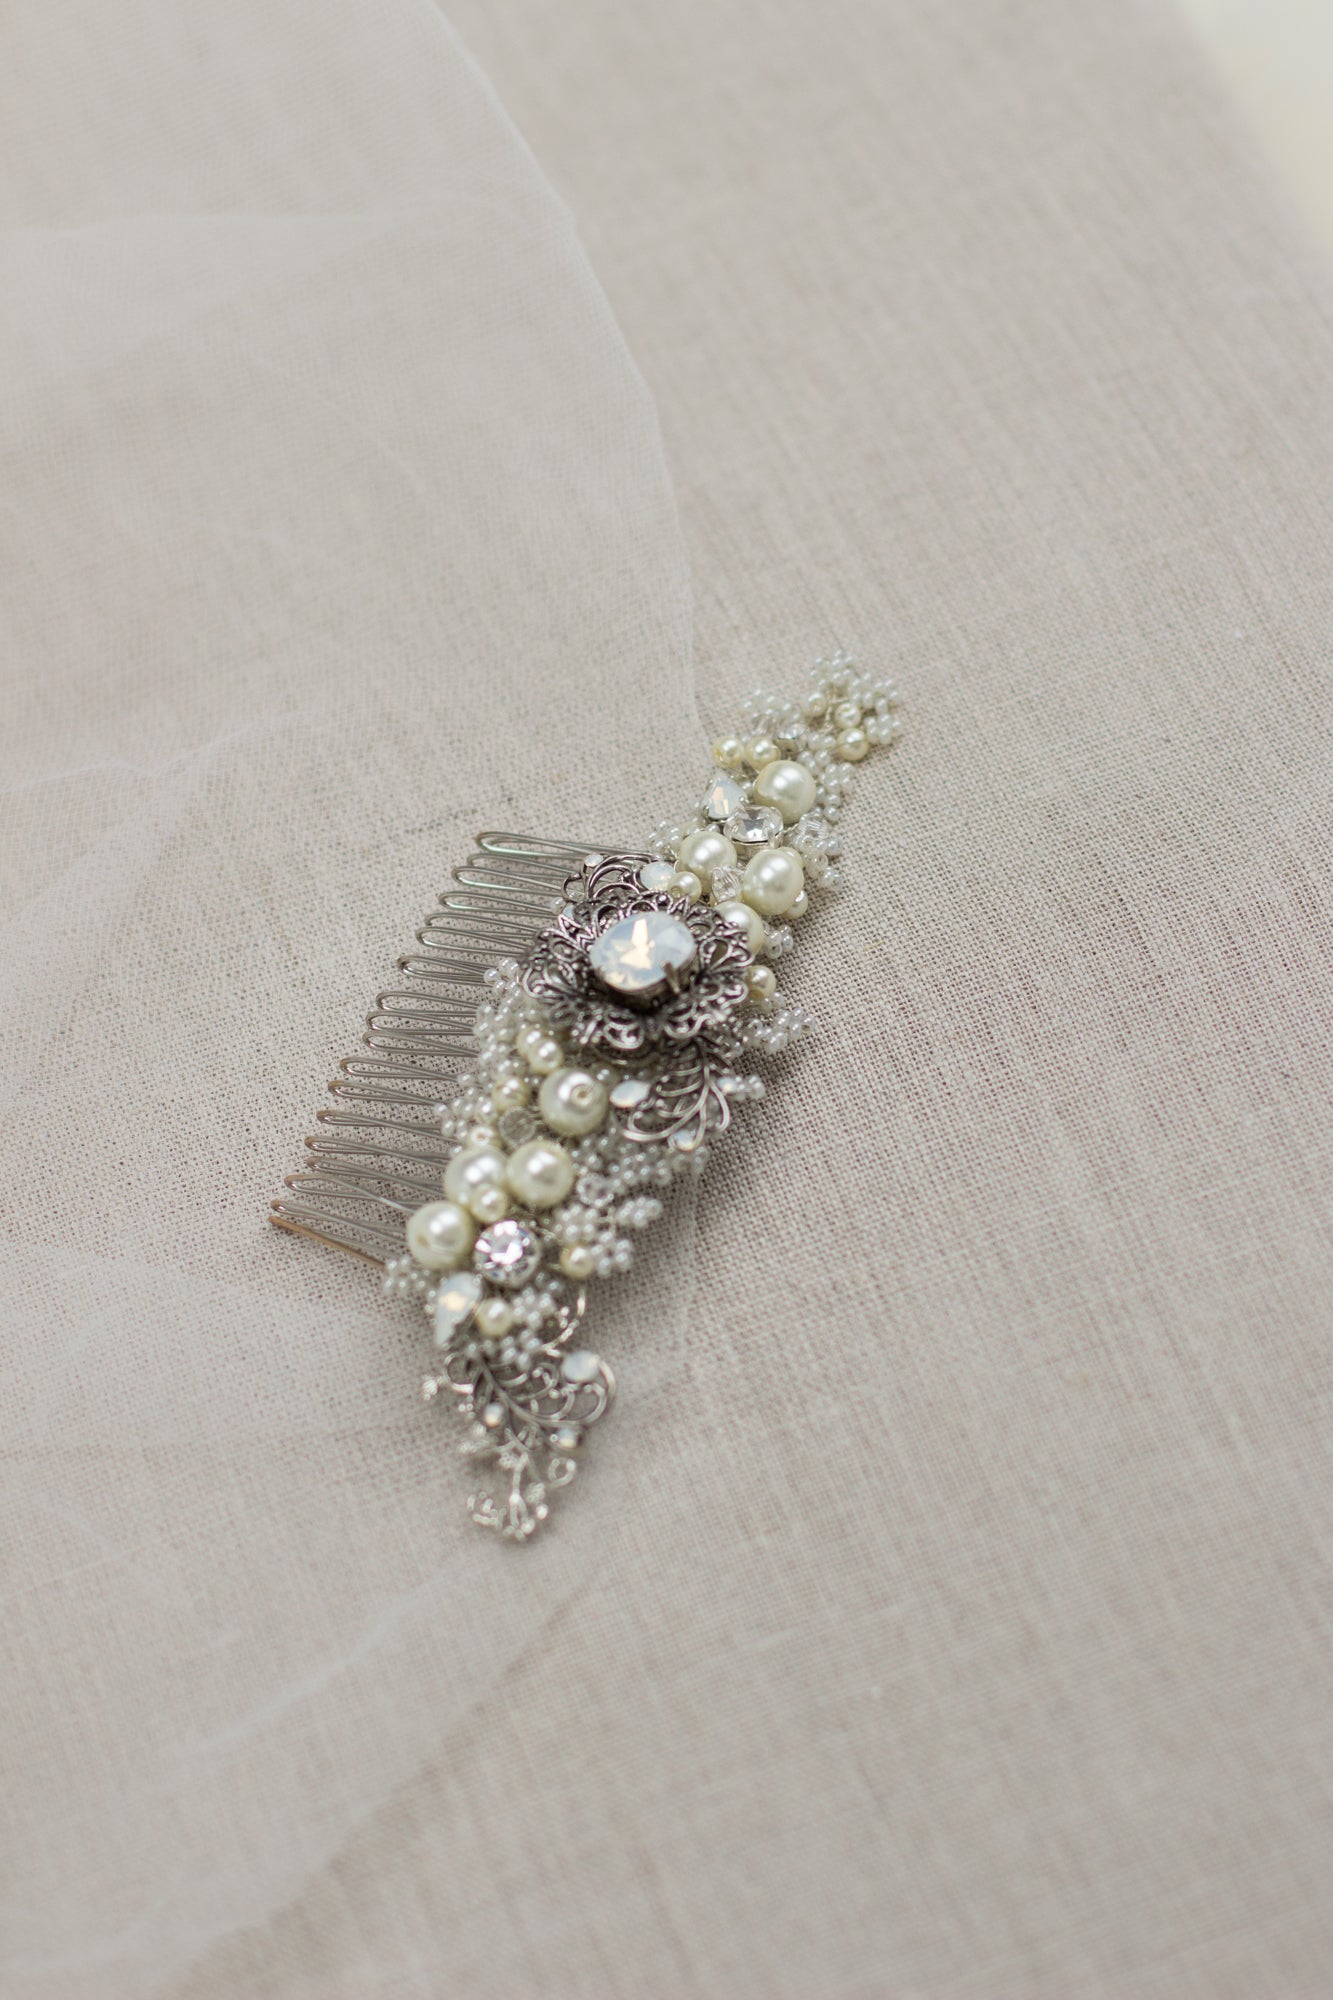 Shop Online wedding One of a kind pearl hair comb. Bridal headpiece. Pearl hair accessories. Handmade Wedding fascinator. Cristal/rhinestone hair comb. Something blue with silver/white opal rhinestone.